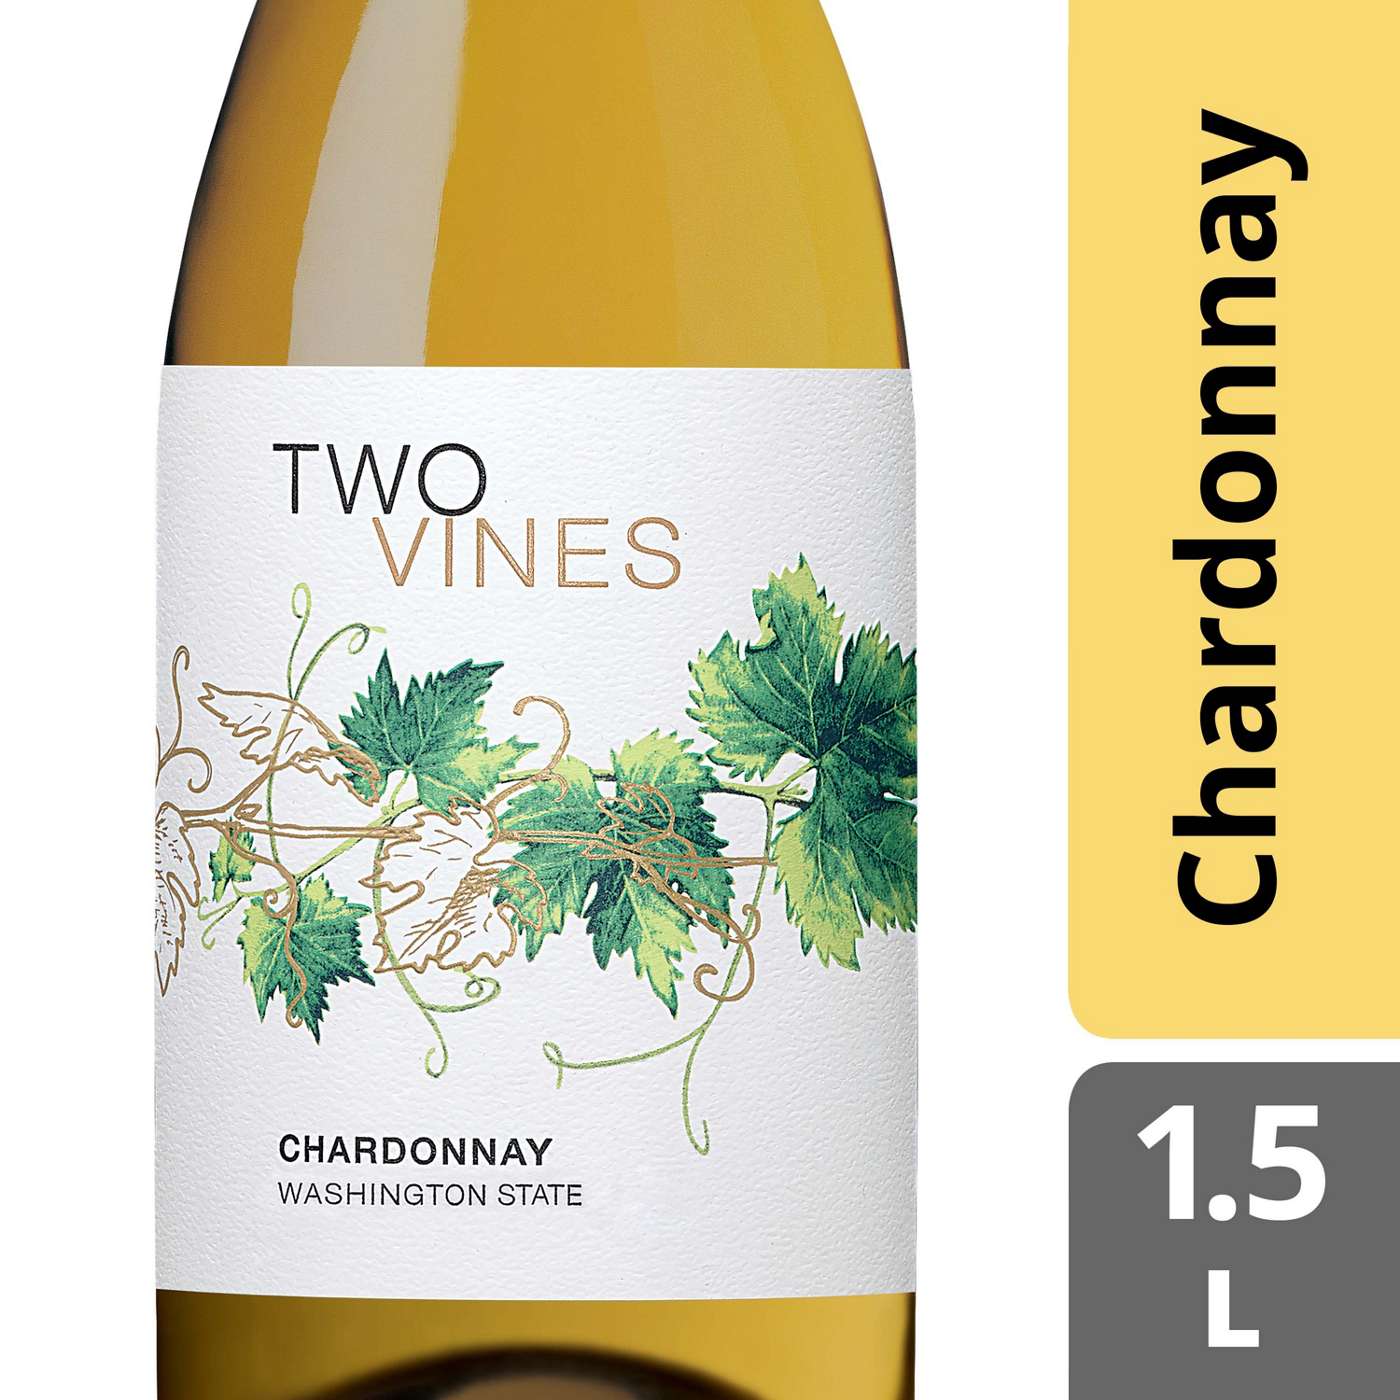 Columbia Crest Two Vines Washington State Chardonnay; image 3 of 3